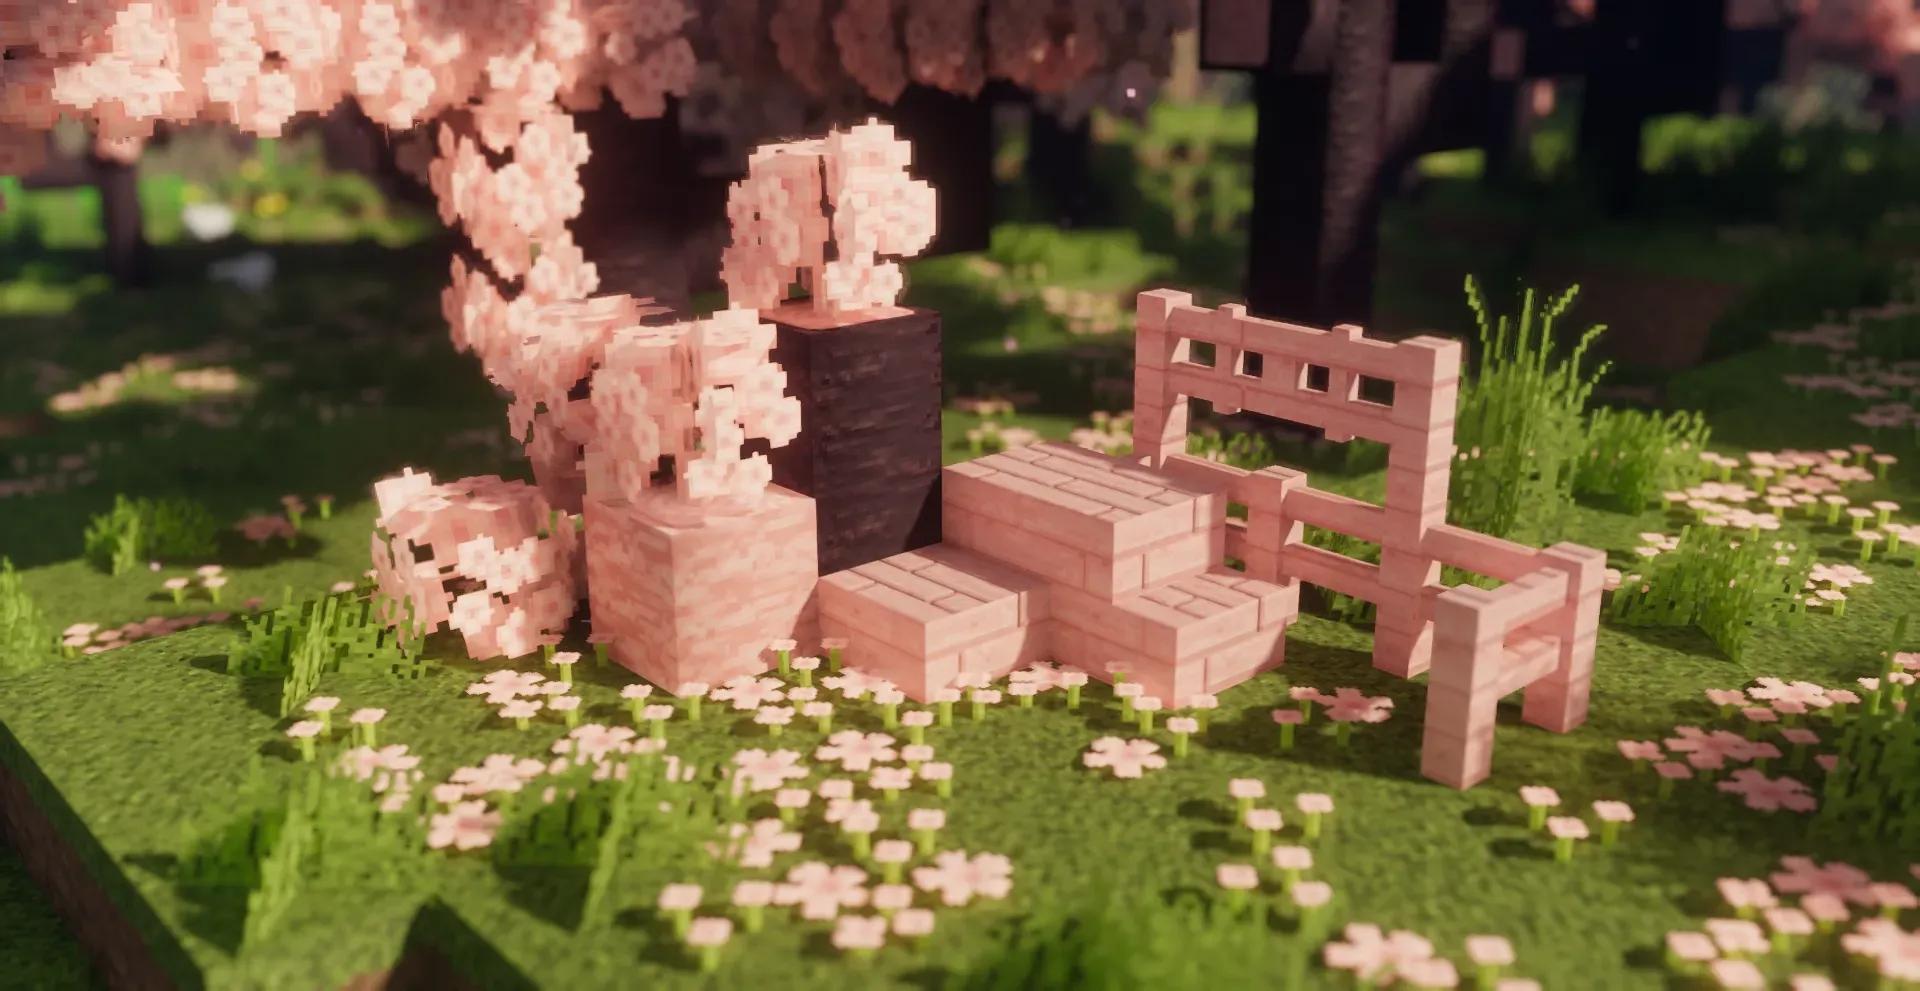 Cherry blossom biome and blocks showcased using SubtlePBR